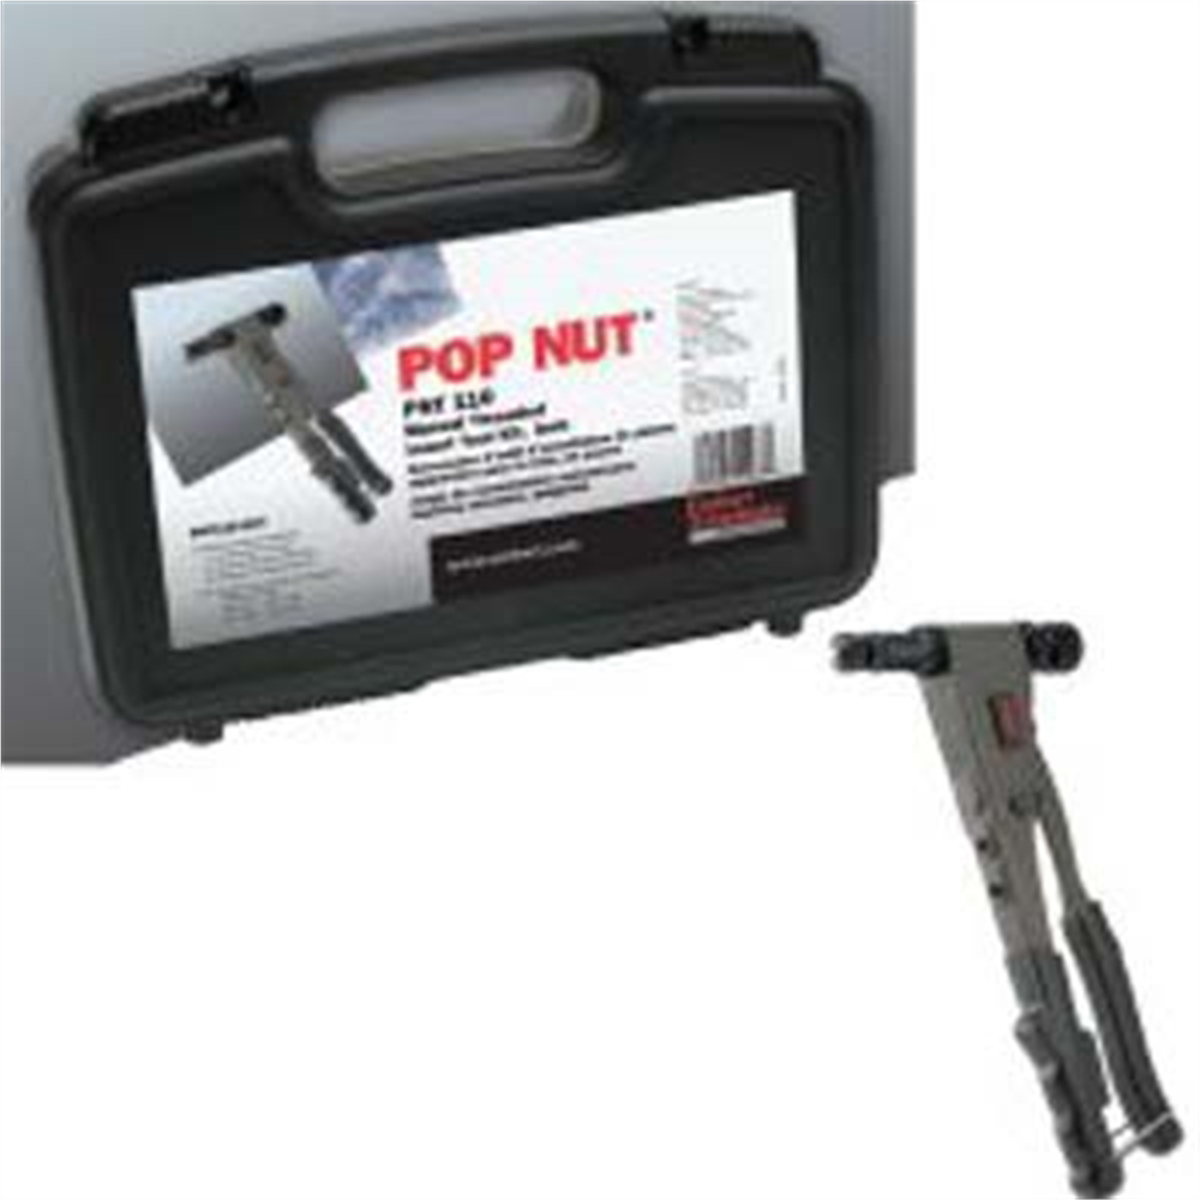 POP NUT Professional Manual Threaded Insert Tool Kit - Metric